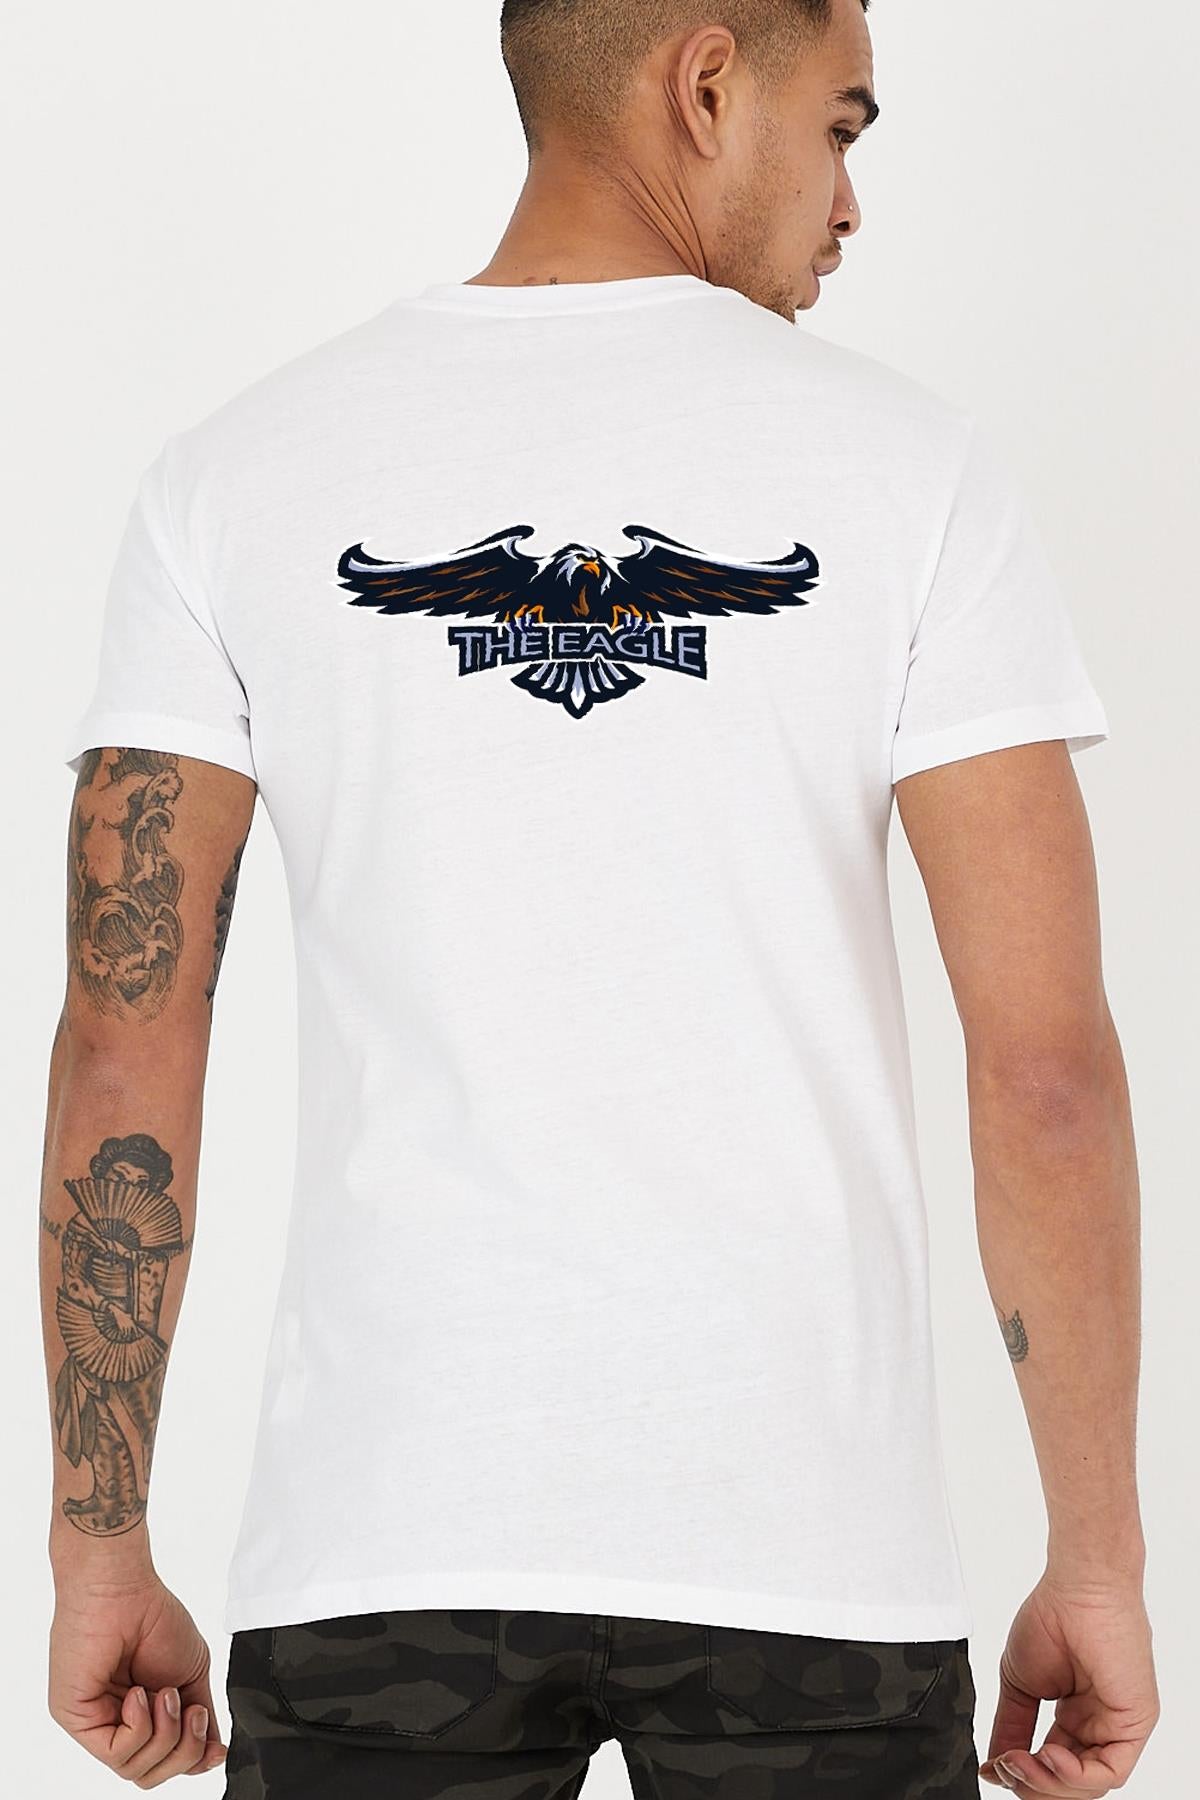 Behind The Eagle Kartal Printed Crew Neck Men's T -shirt